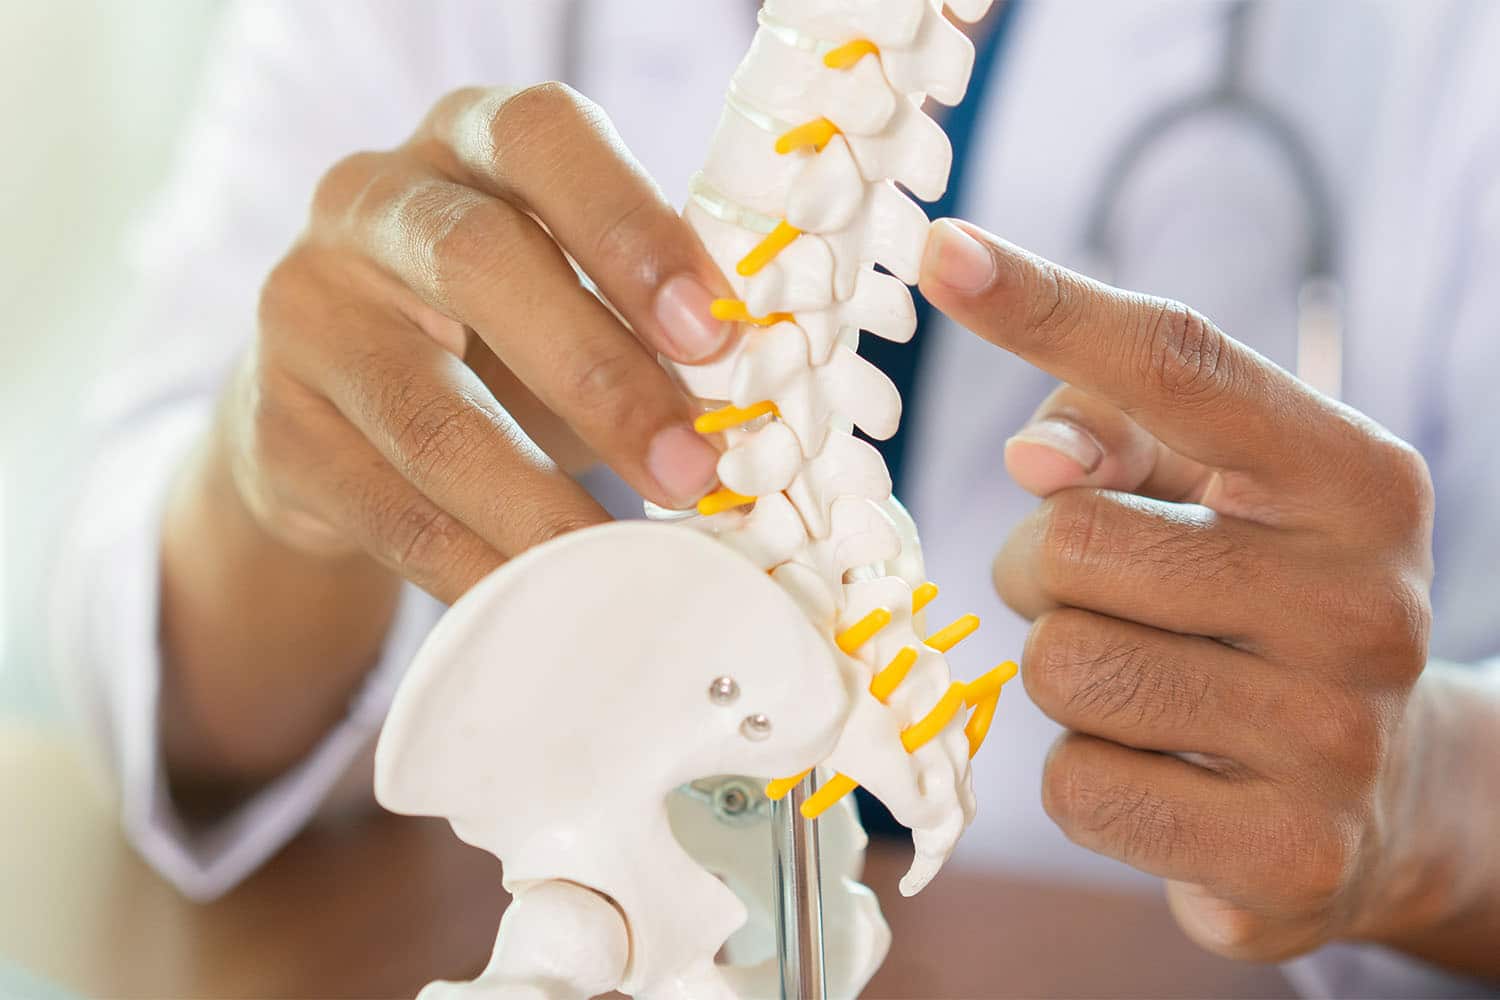 What Does Bone Pain Feel Like? Bone Pain vs. Other Aches